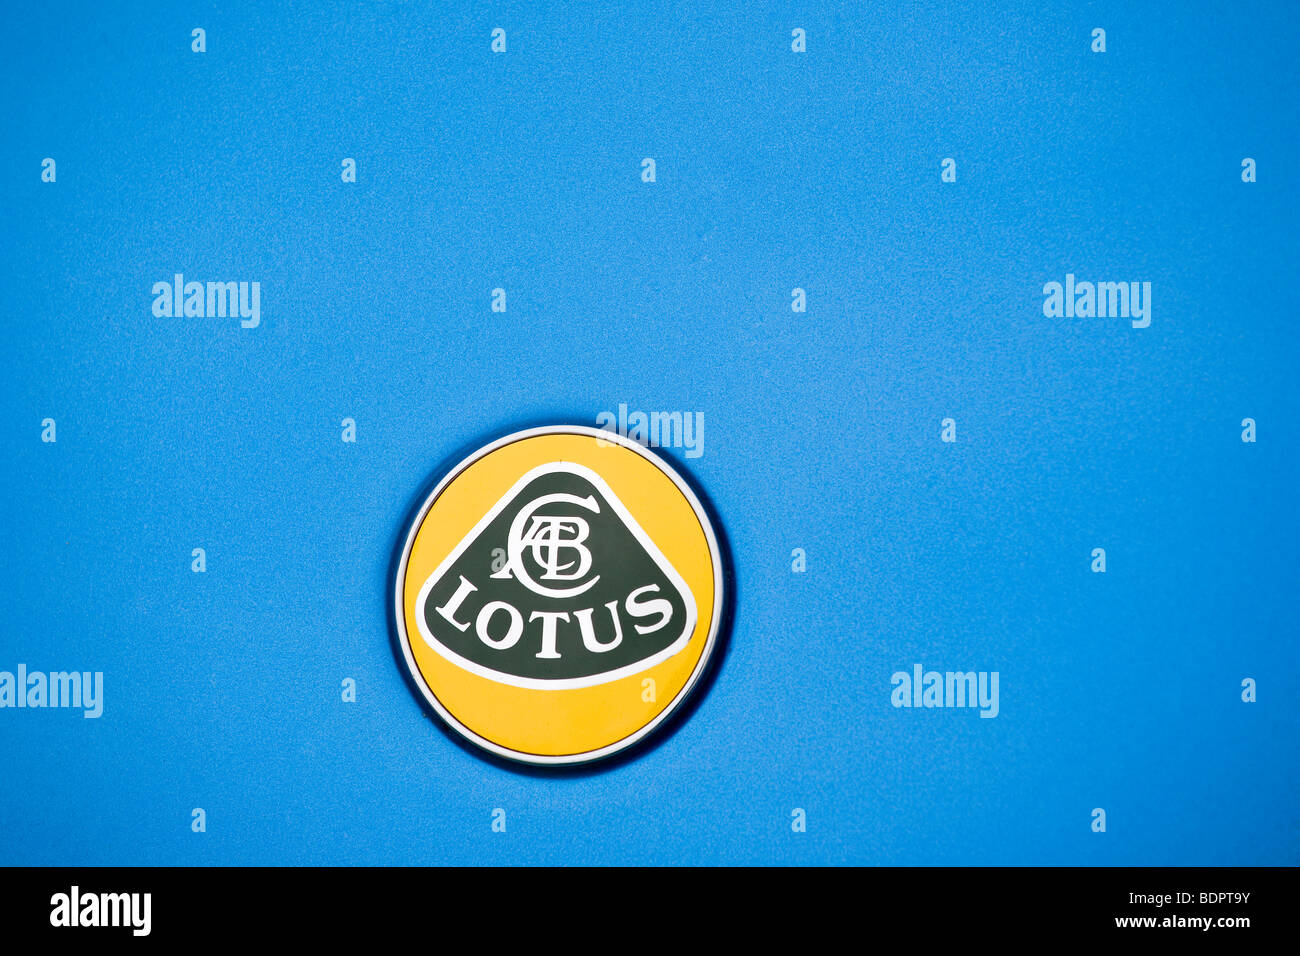 Lotus car badge Stock Photo